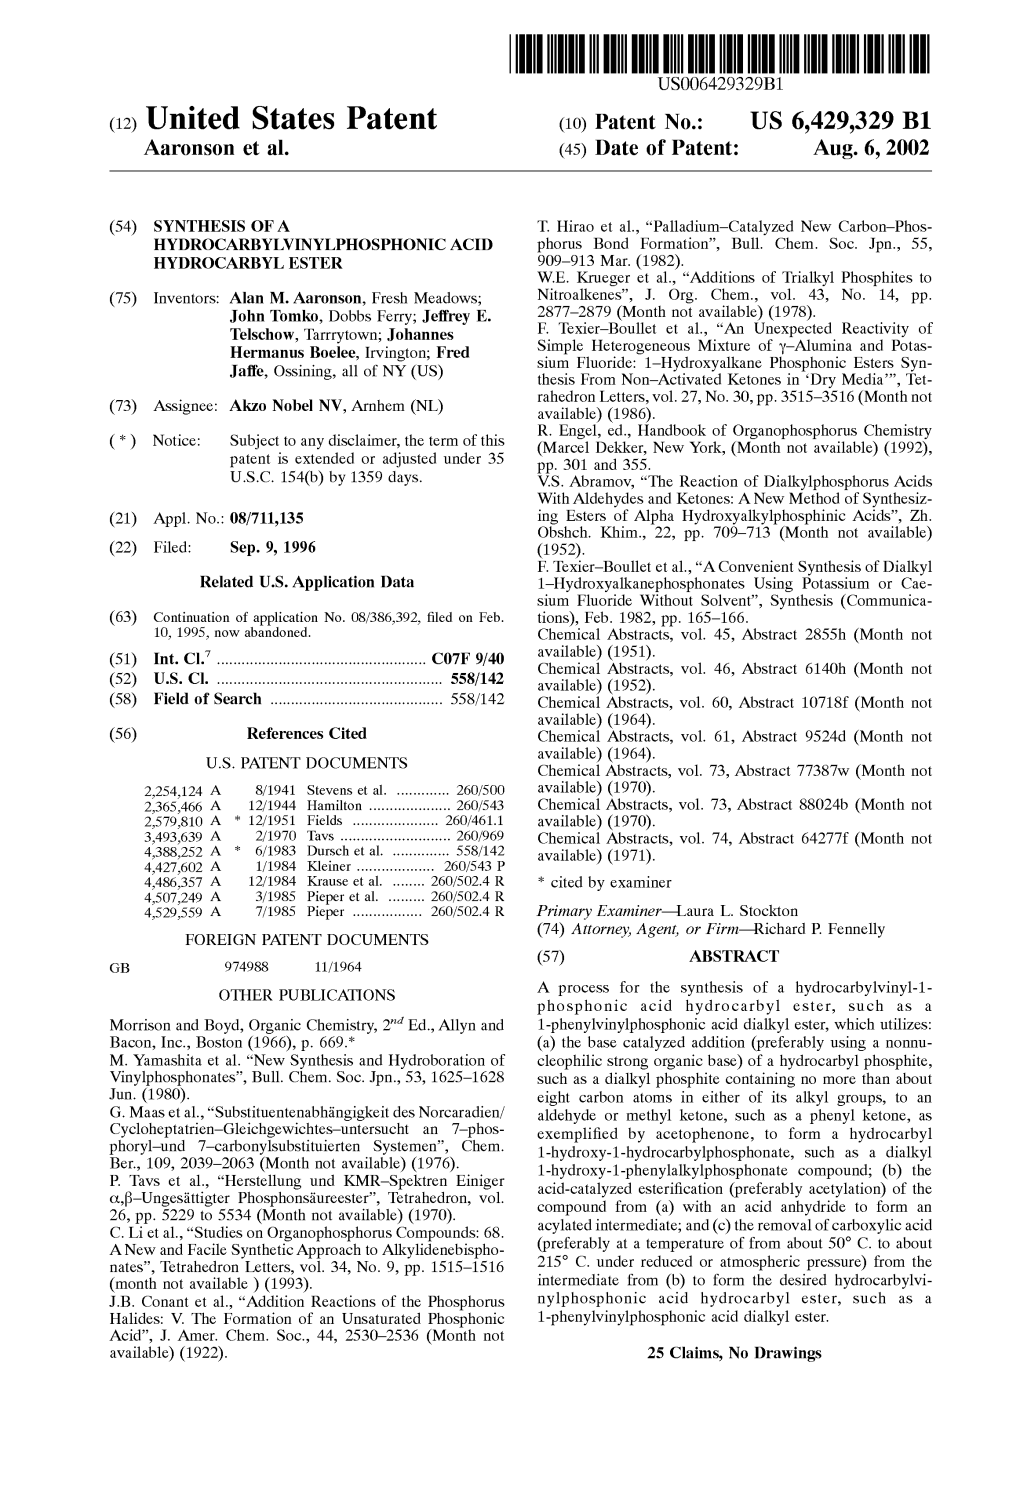 (12) United States Patent (10) Patent No.: US 6,429,329 B1 Aarons0n Et Al